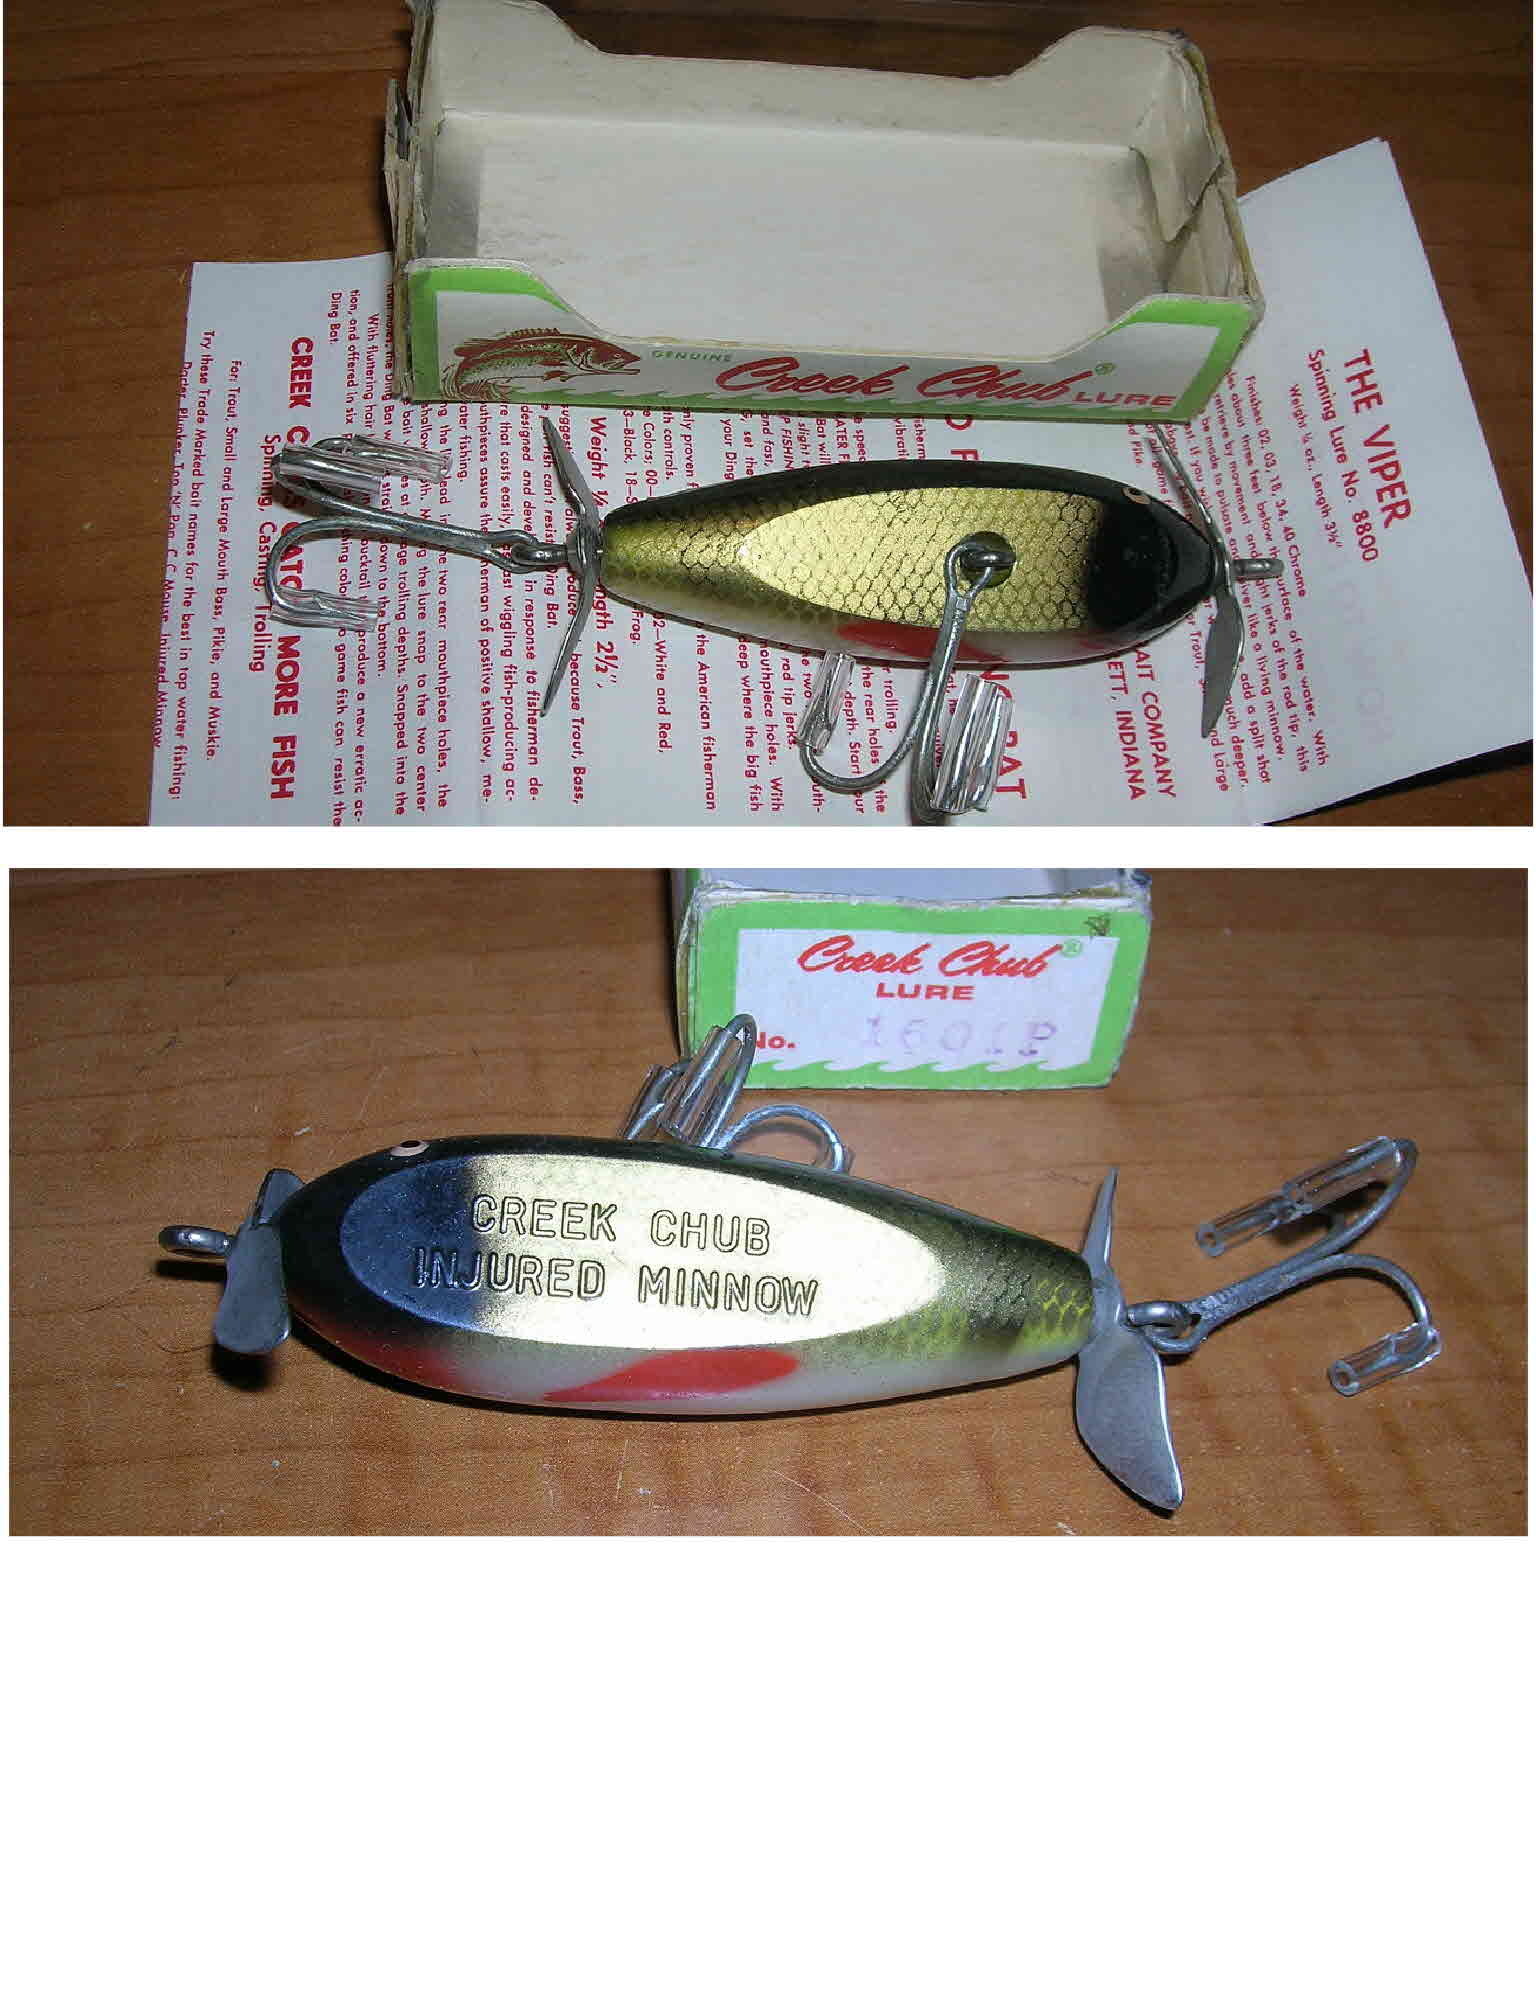 Creek Chub Plastic 2-1/2 Darter Vintage Fishing Lure, Pike Scale Finish -  Catania Gomme S.r.l.